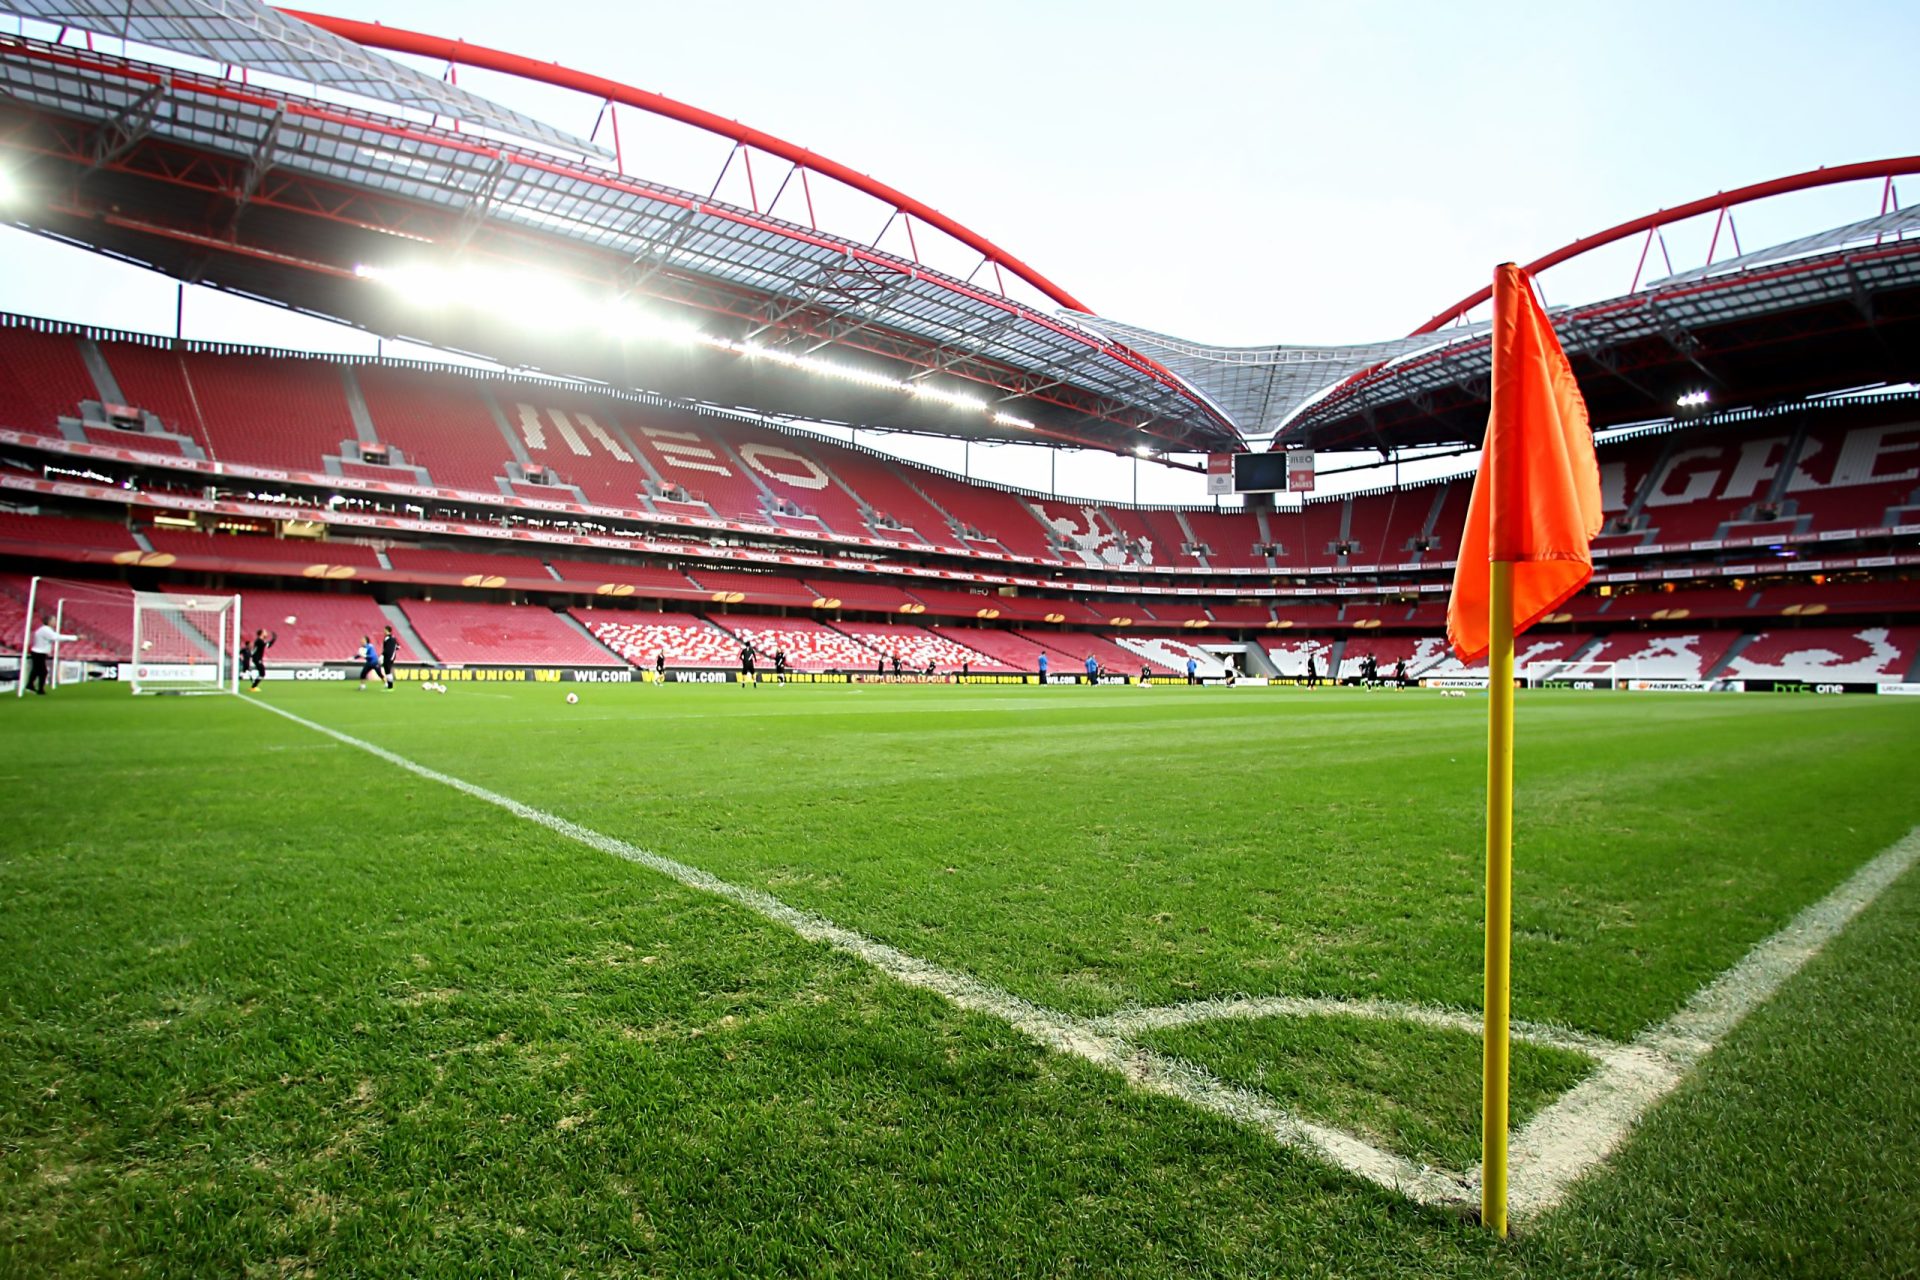 Benfica nega “total e categoricamente” aliciamento de jogadores do Marítimo